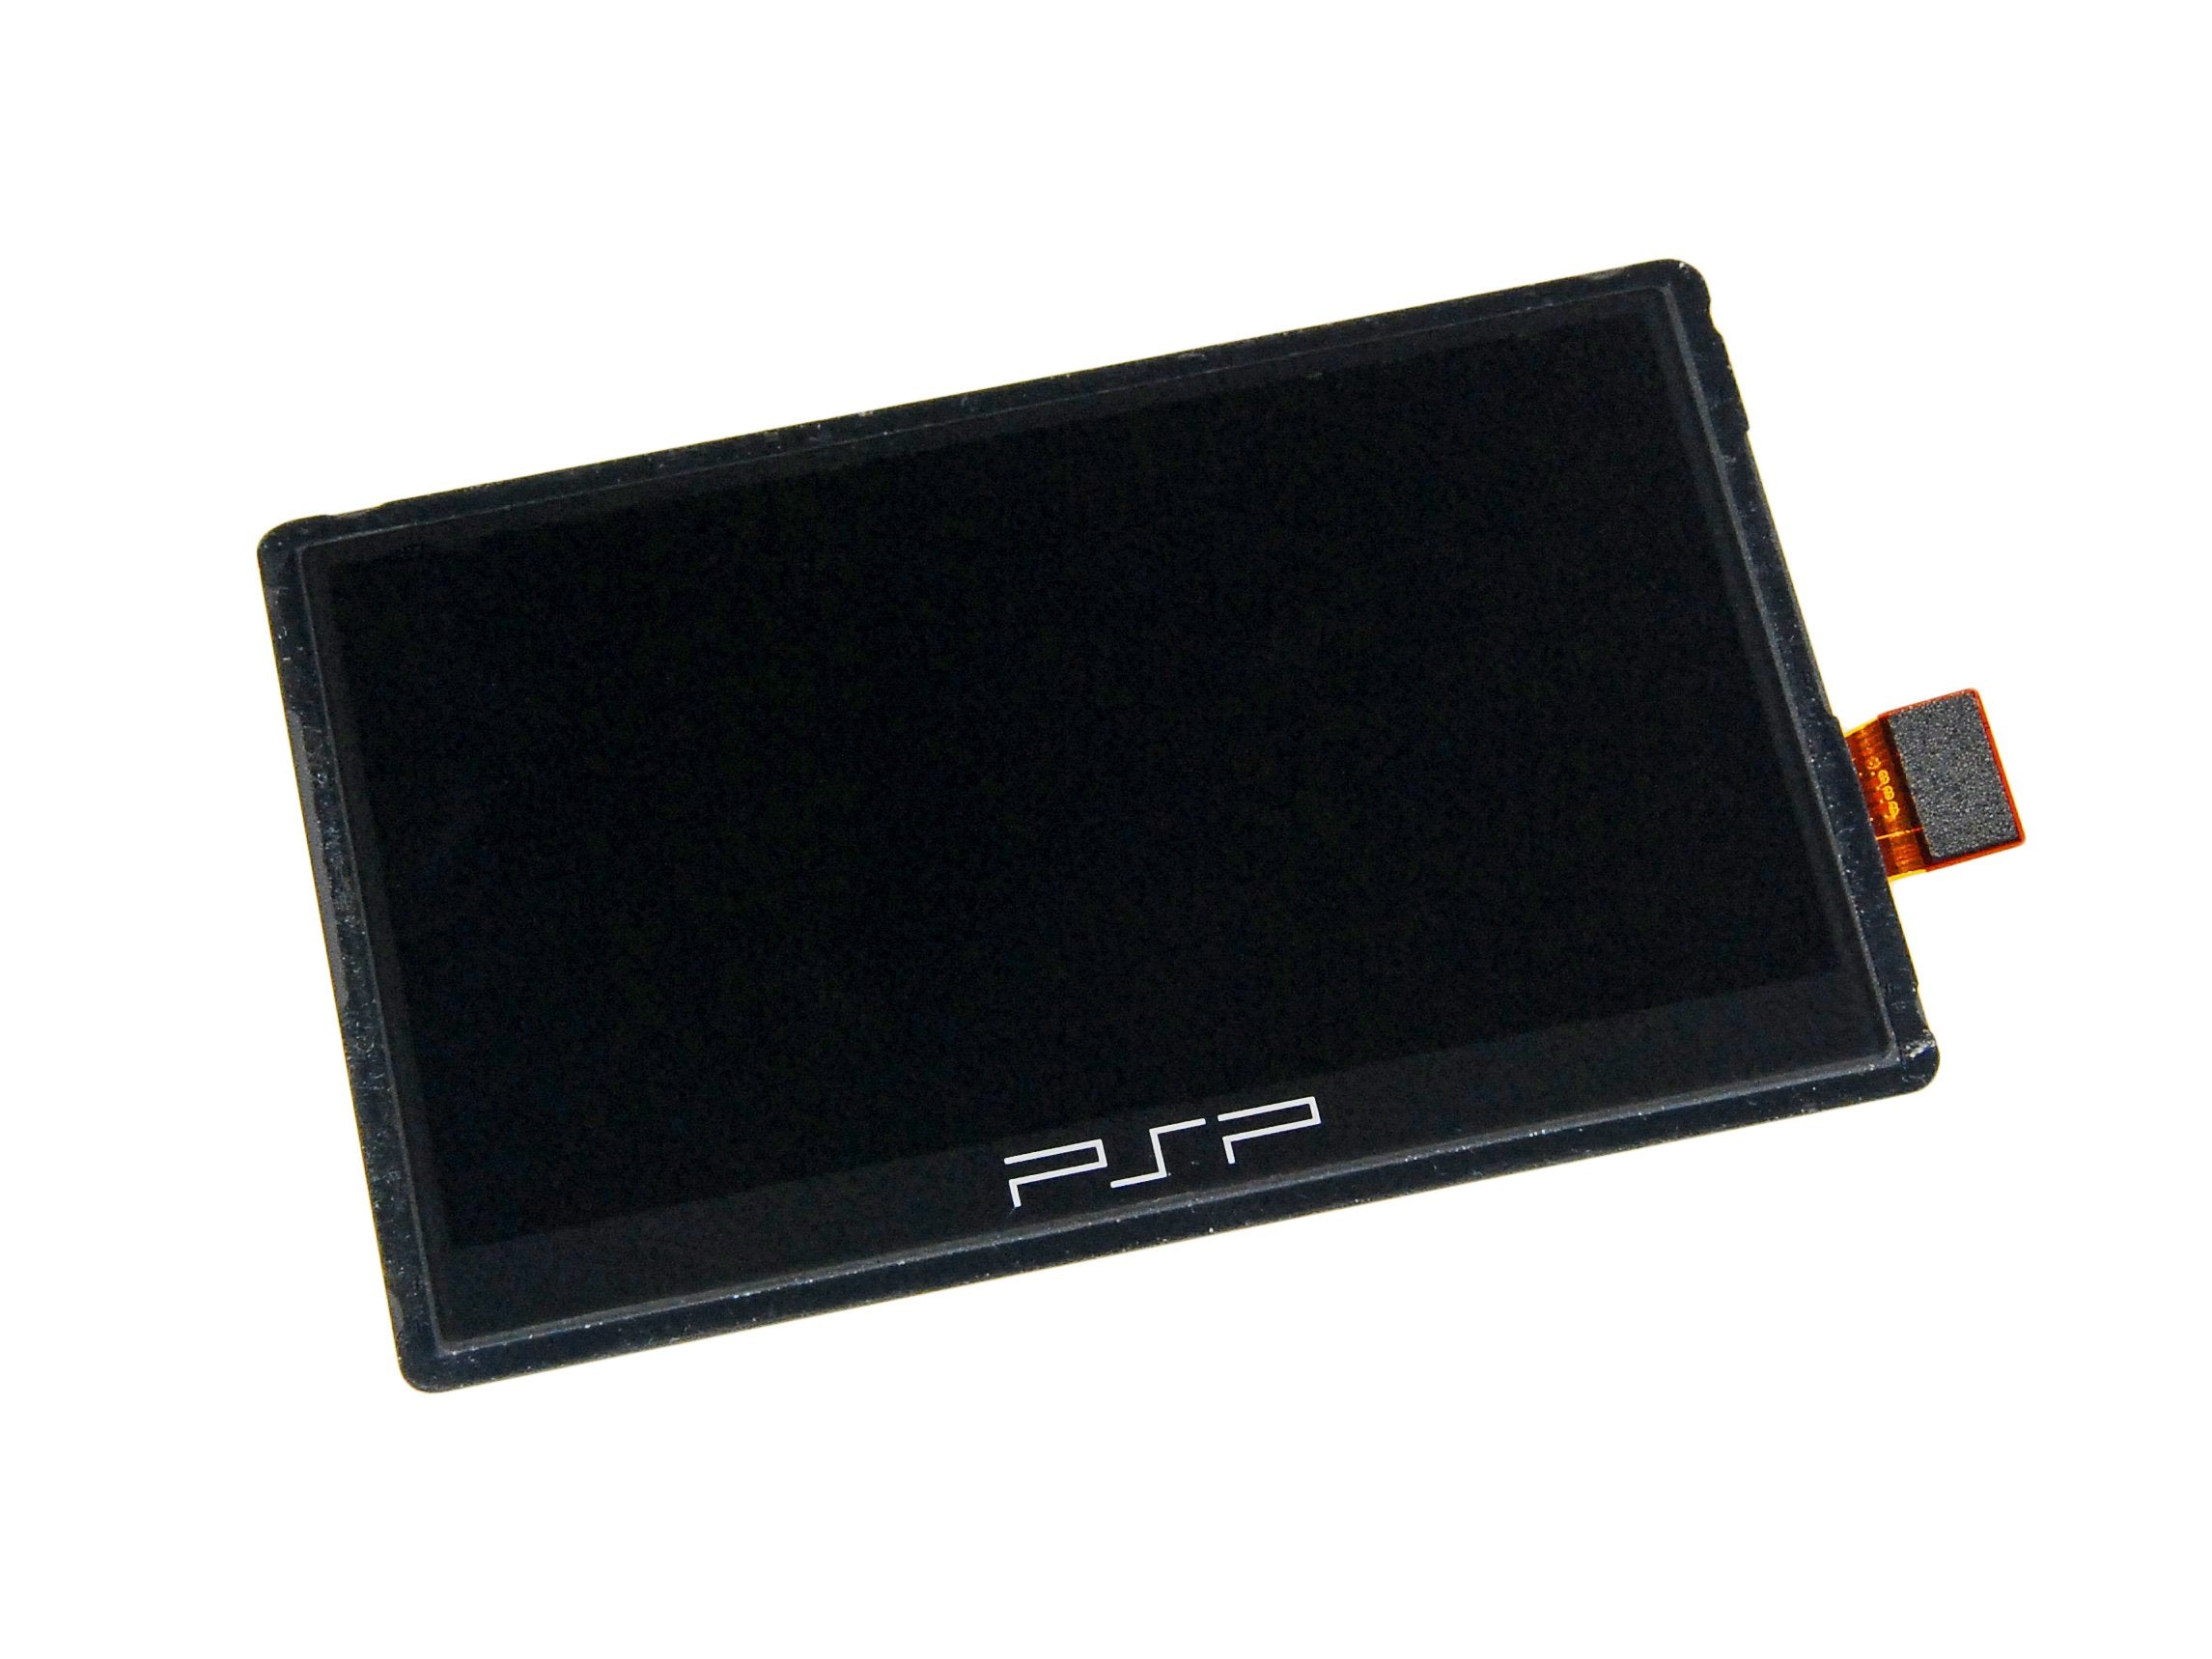 Sony PSP Go Display